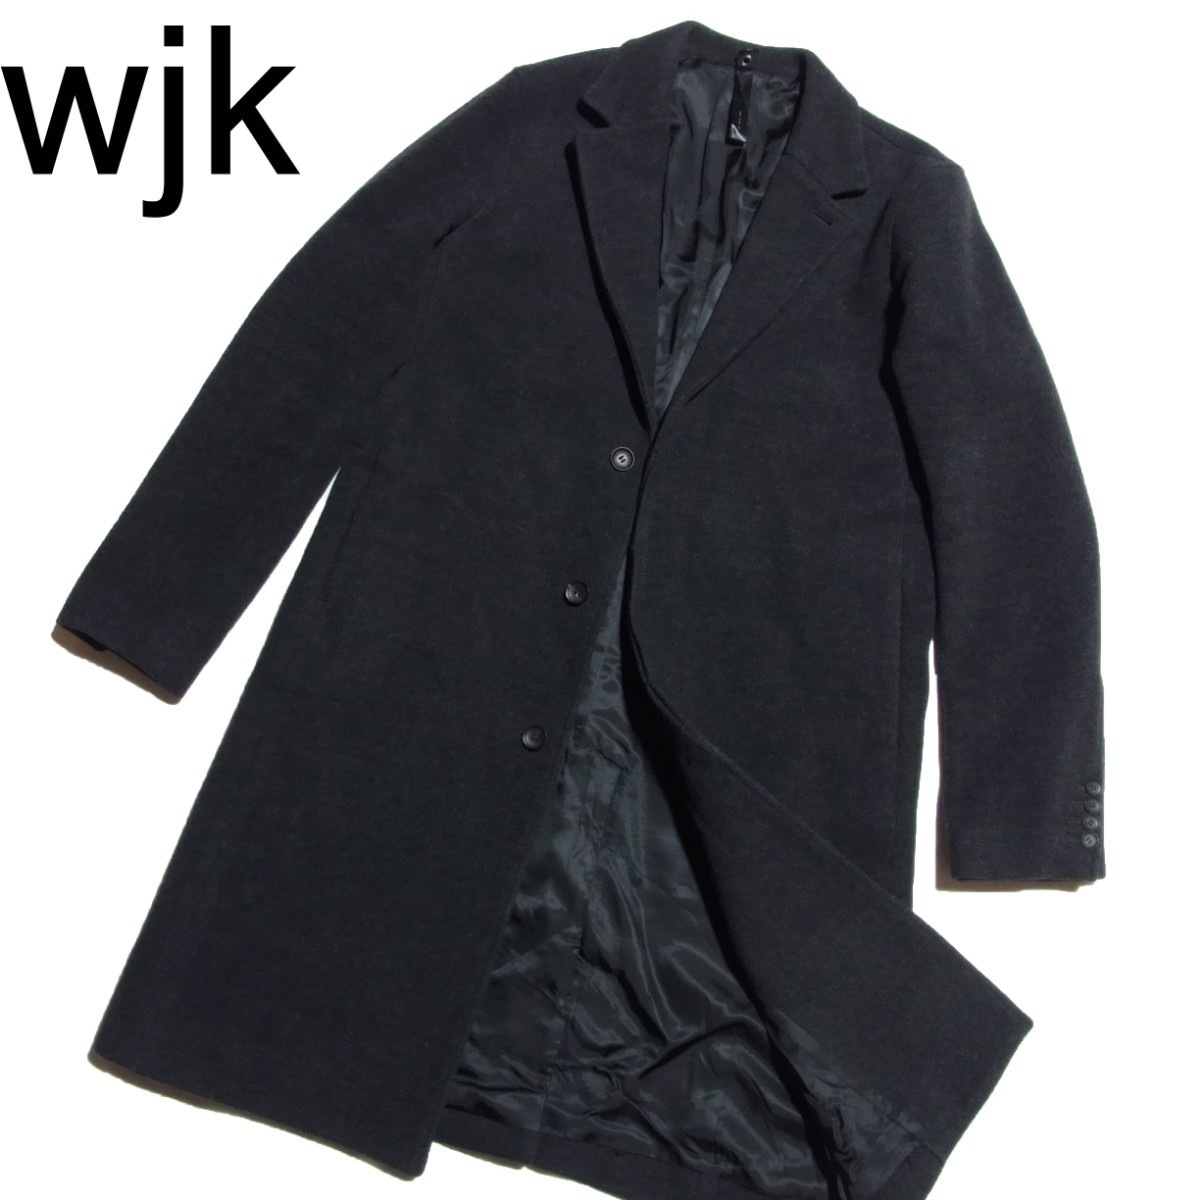 wjk fine wool chester メルトン チェスターコート L ダークグレー 1817 wl77p